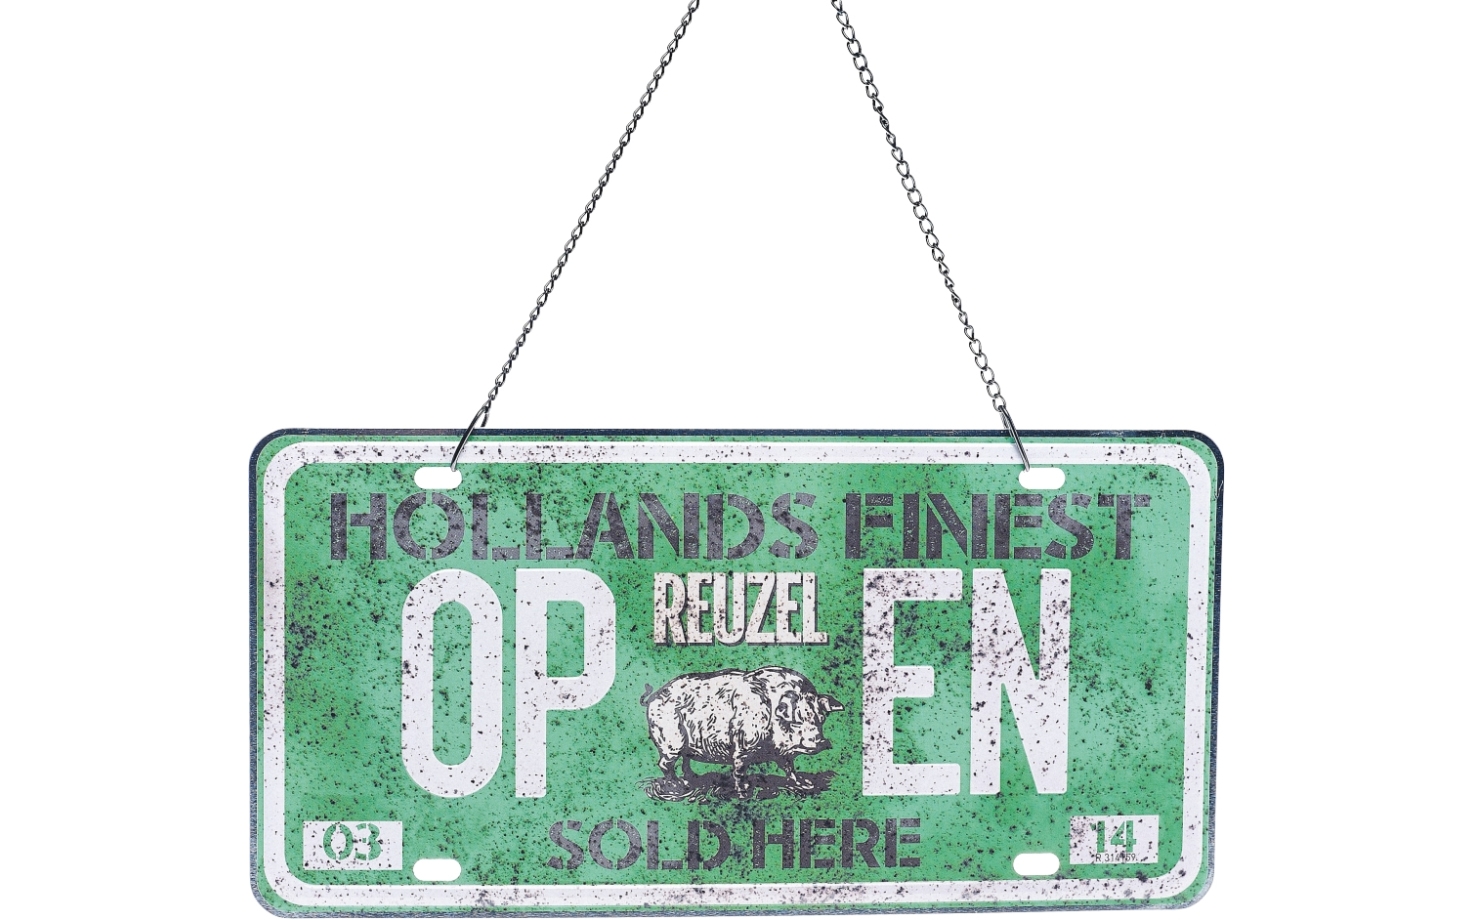 Reuzel Open/Close Schild